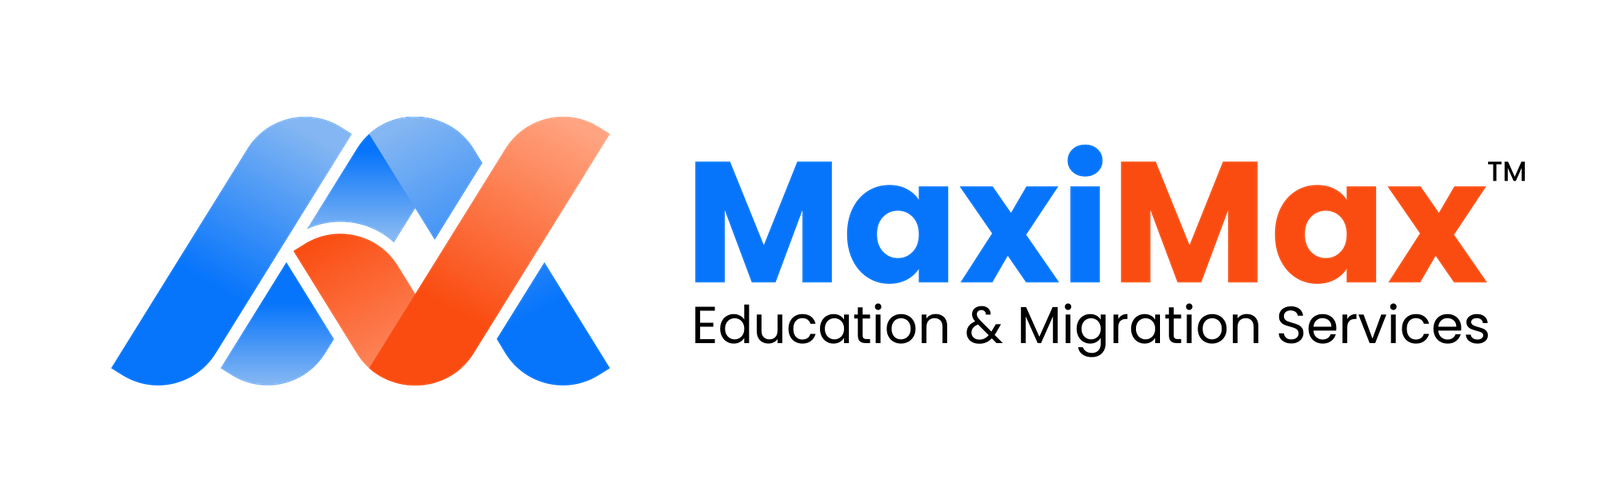 Maximax Logo